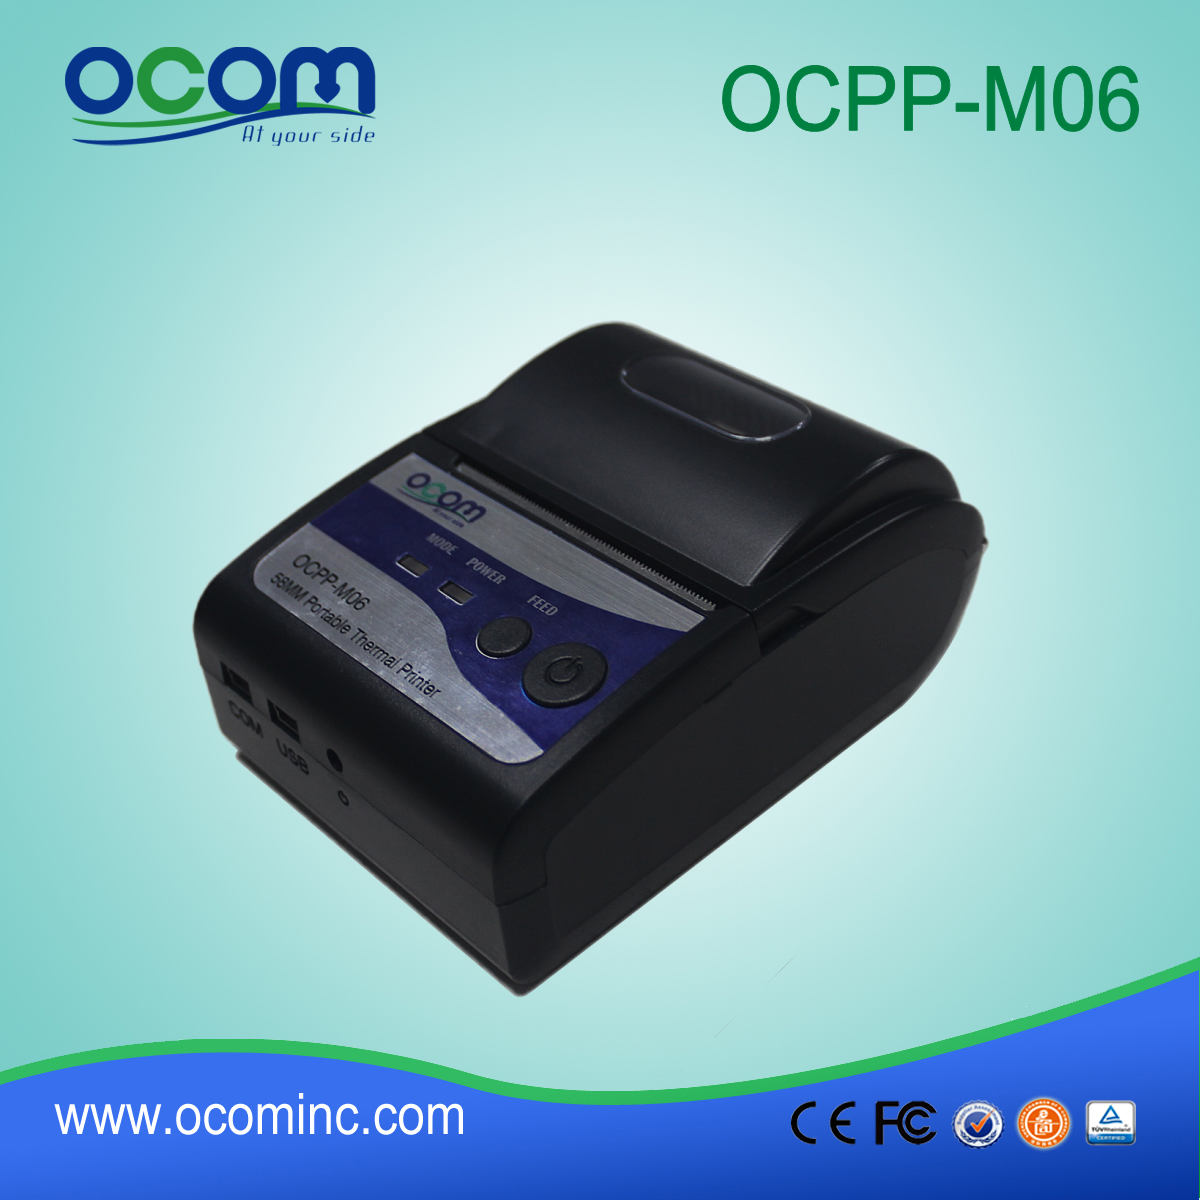 OCPP-M06: Κινέζικα cheapeast εκτυπωτή POS OCOM 58 χιλιοστά, 58 χιλιοστά εκτυπωτή POS